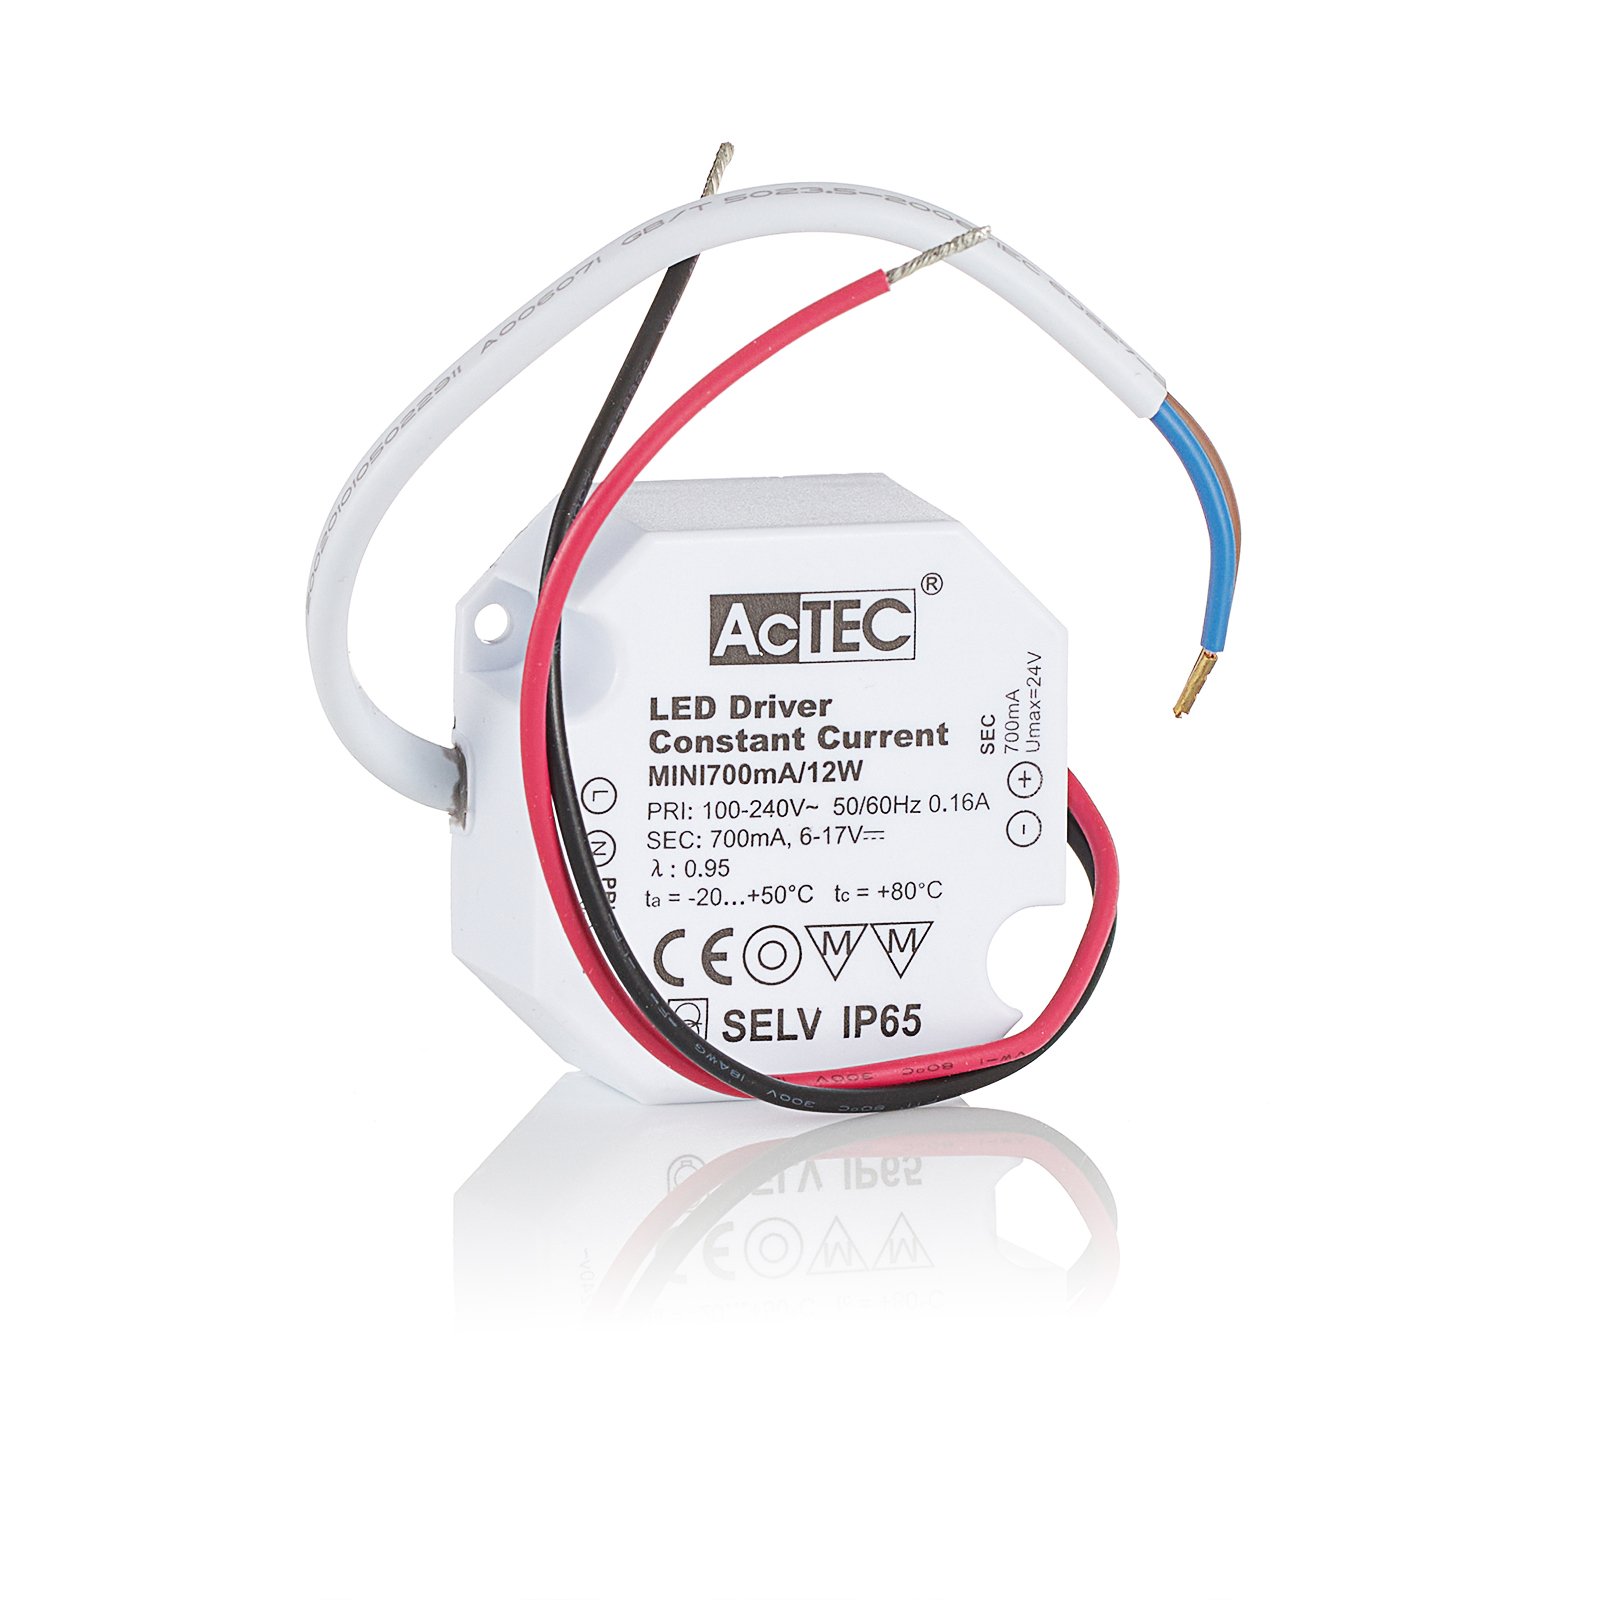 AcTEC Mini LED driver CC 700 mA, 12 W, IP65